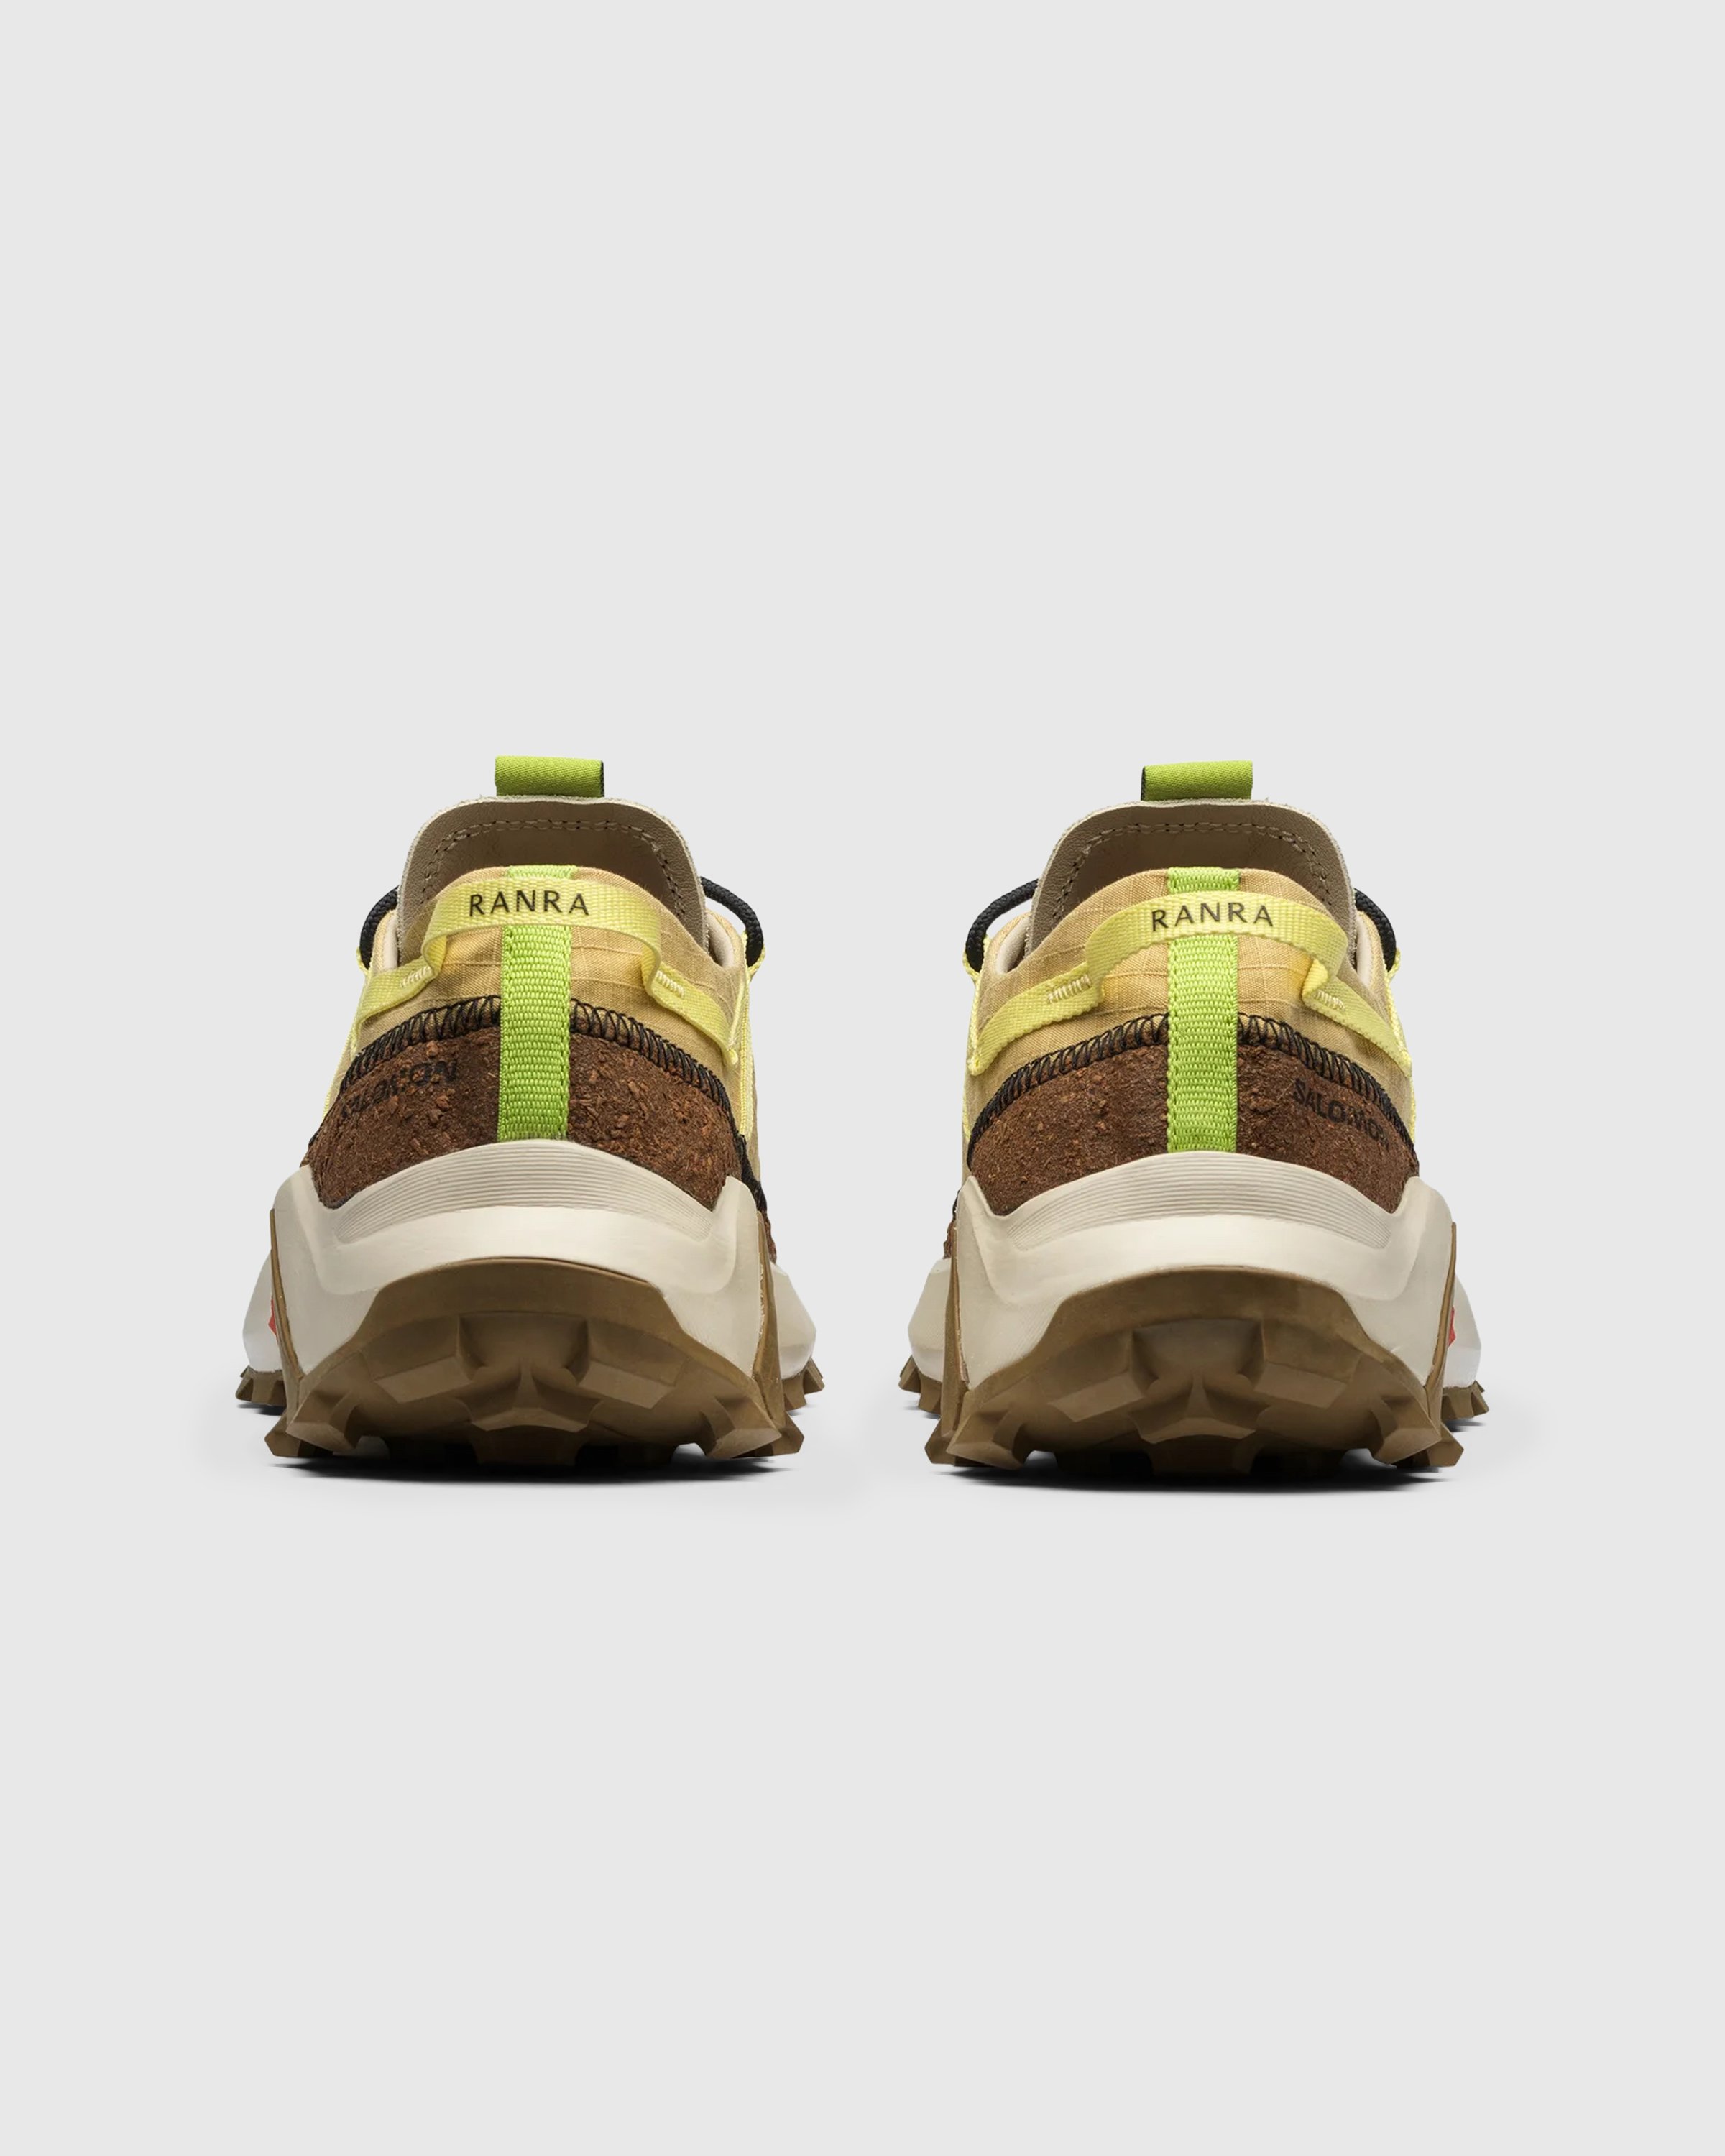 RANRA x Salomon - CROSS PRO BETTER CATHAY SPI - Footwear - Brown - Image 4